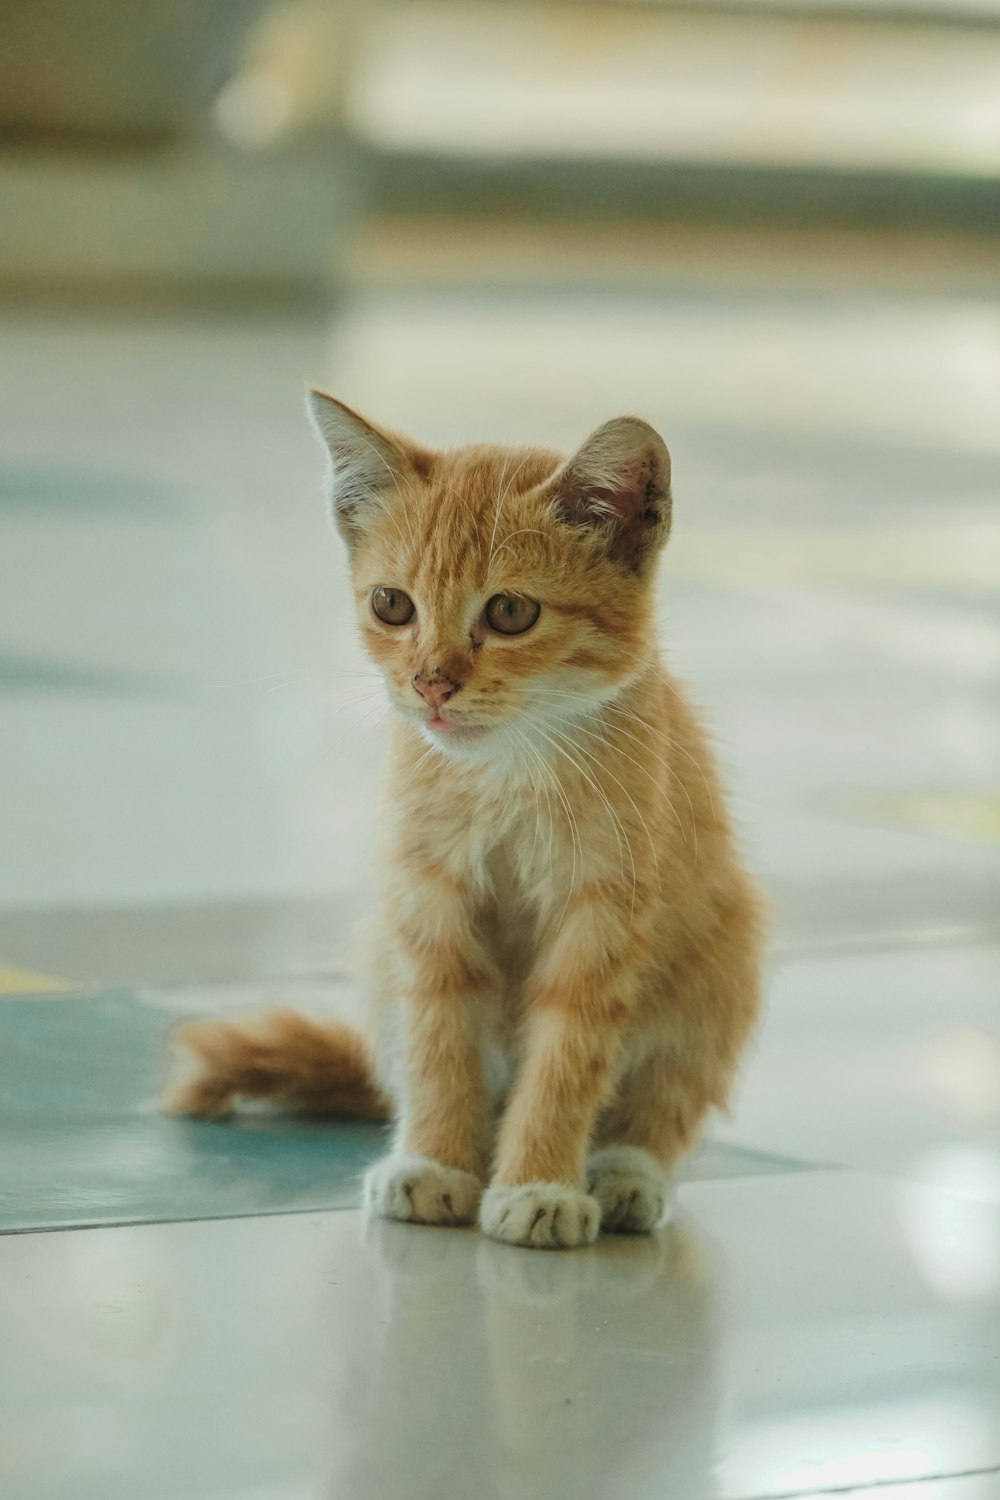 a small orange kitten sitting on top of a floor